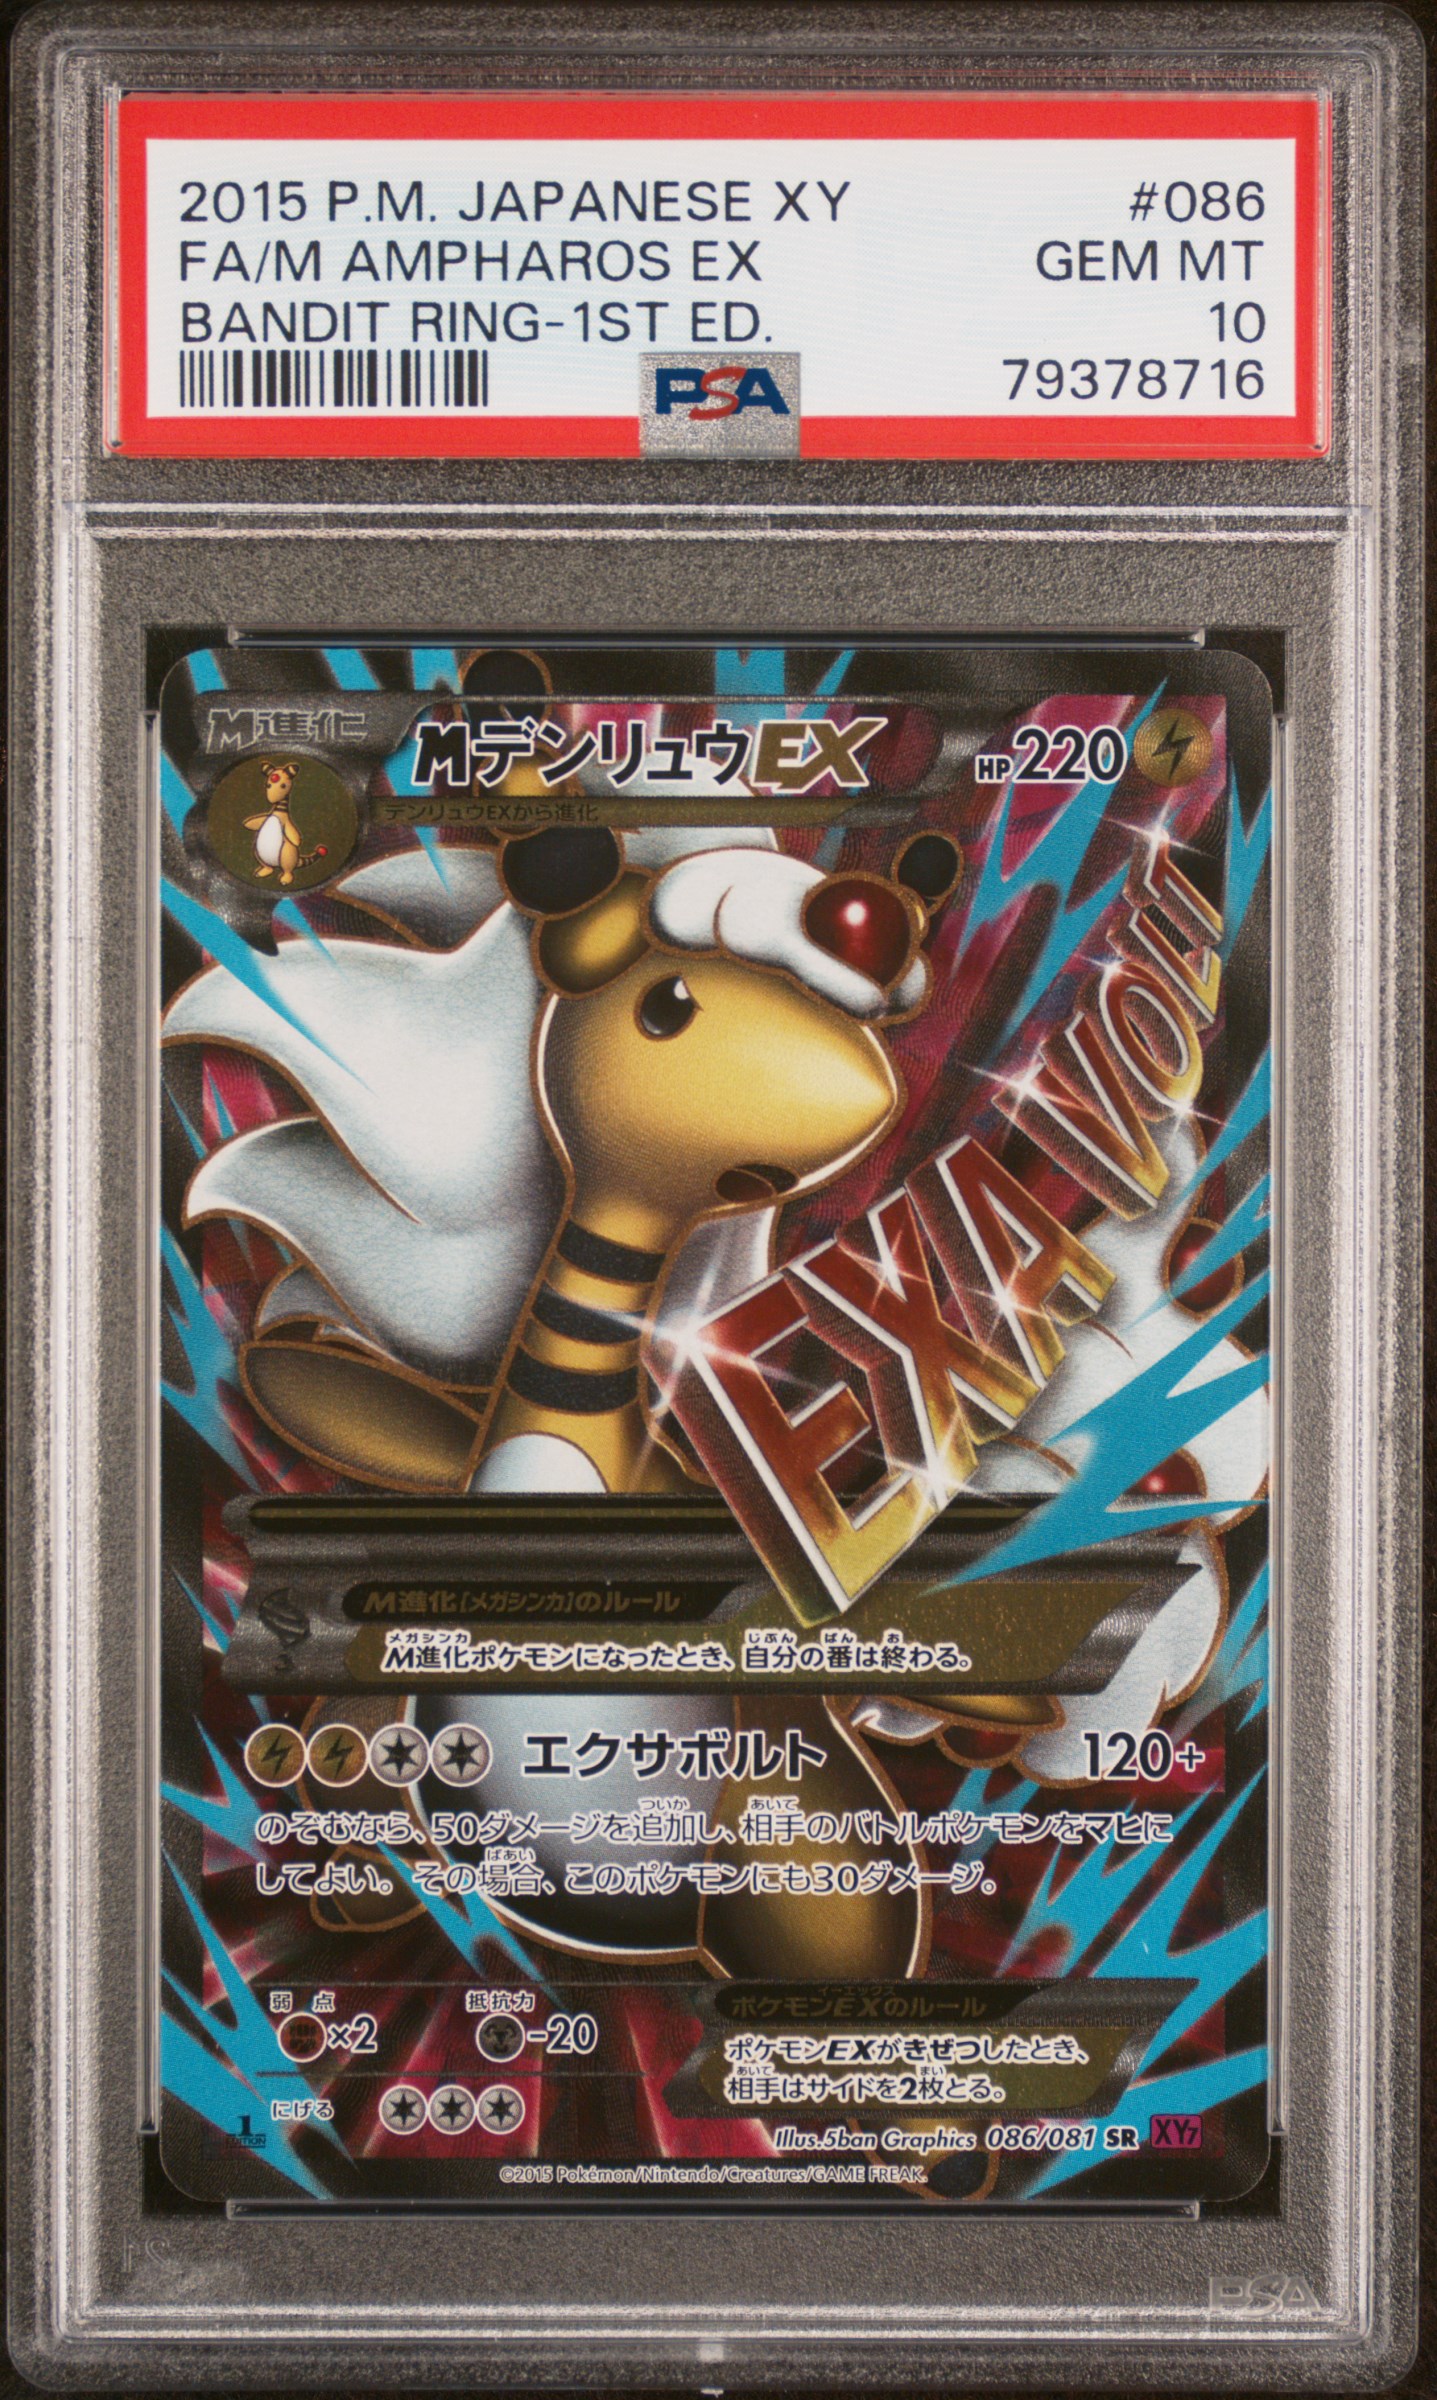 2015 Pokemon Japanese Xy Bandit Ring 1st Edition #086 Full Art/M Ampharos Ex – PSA GEM MT 10